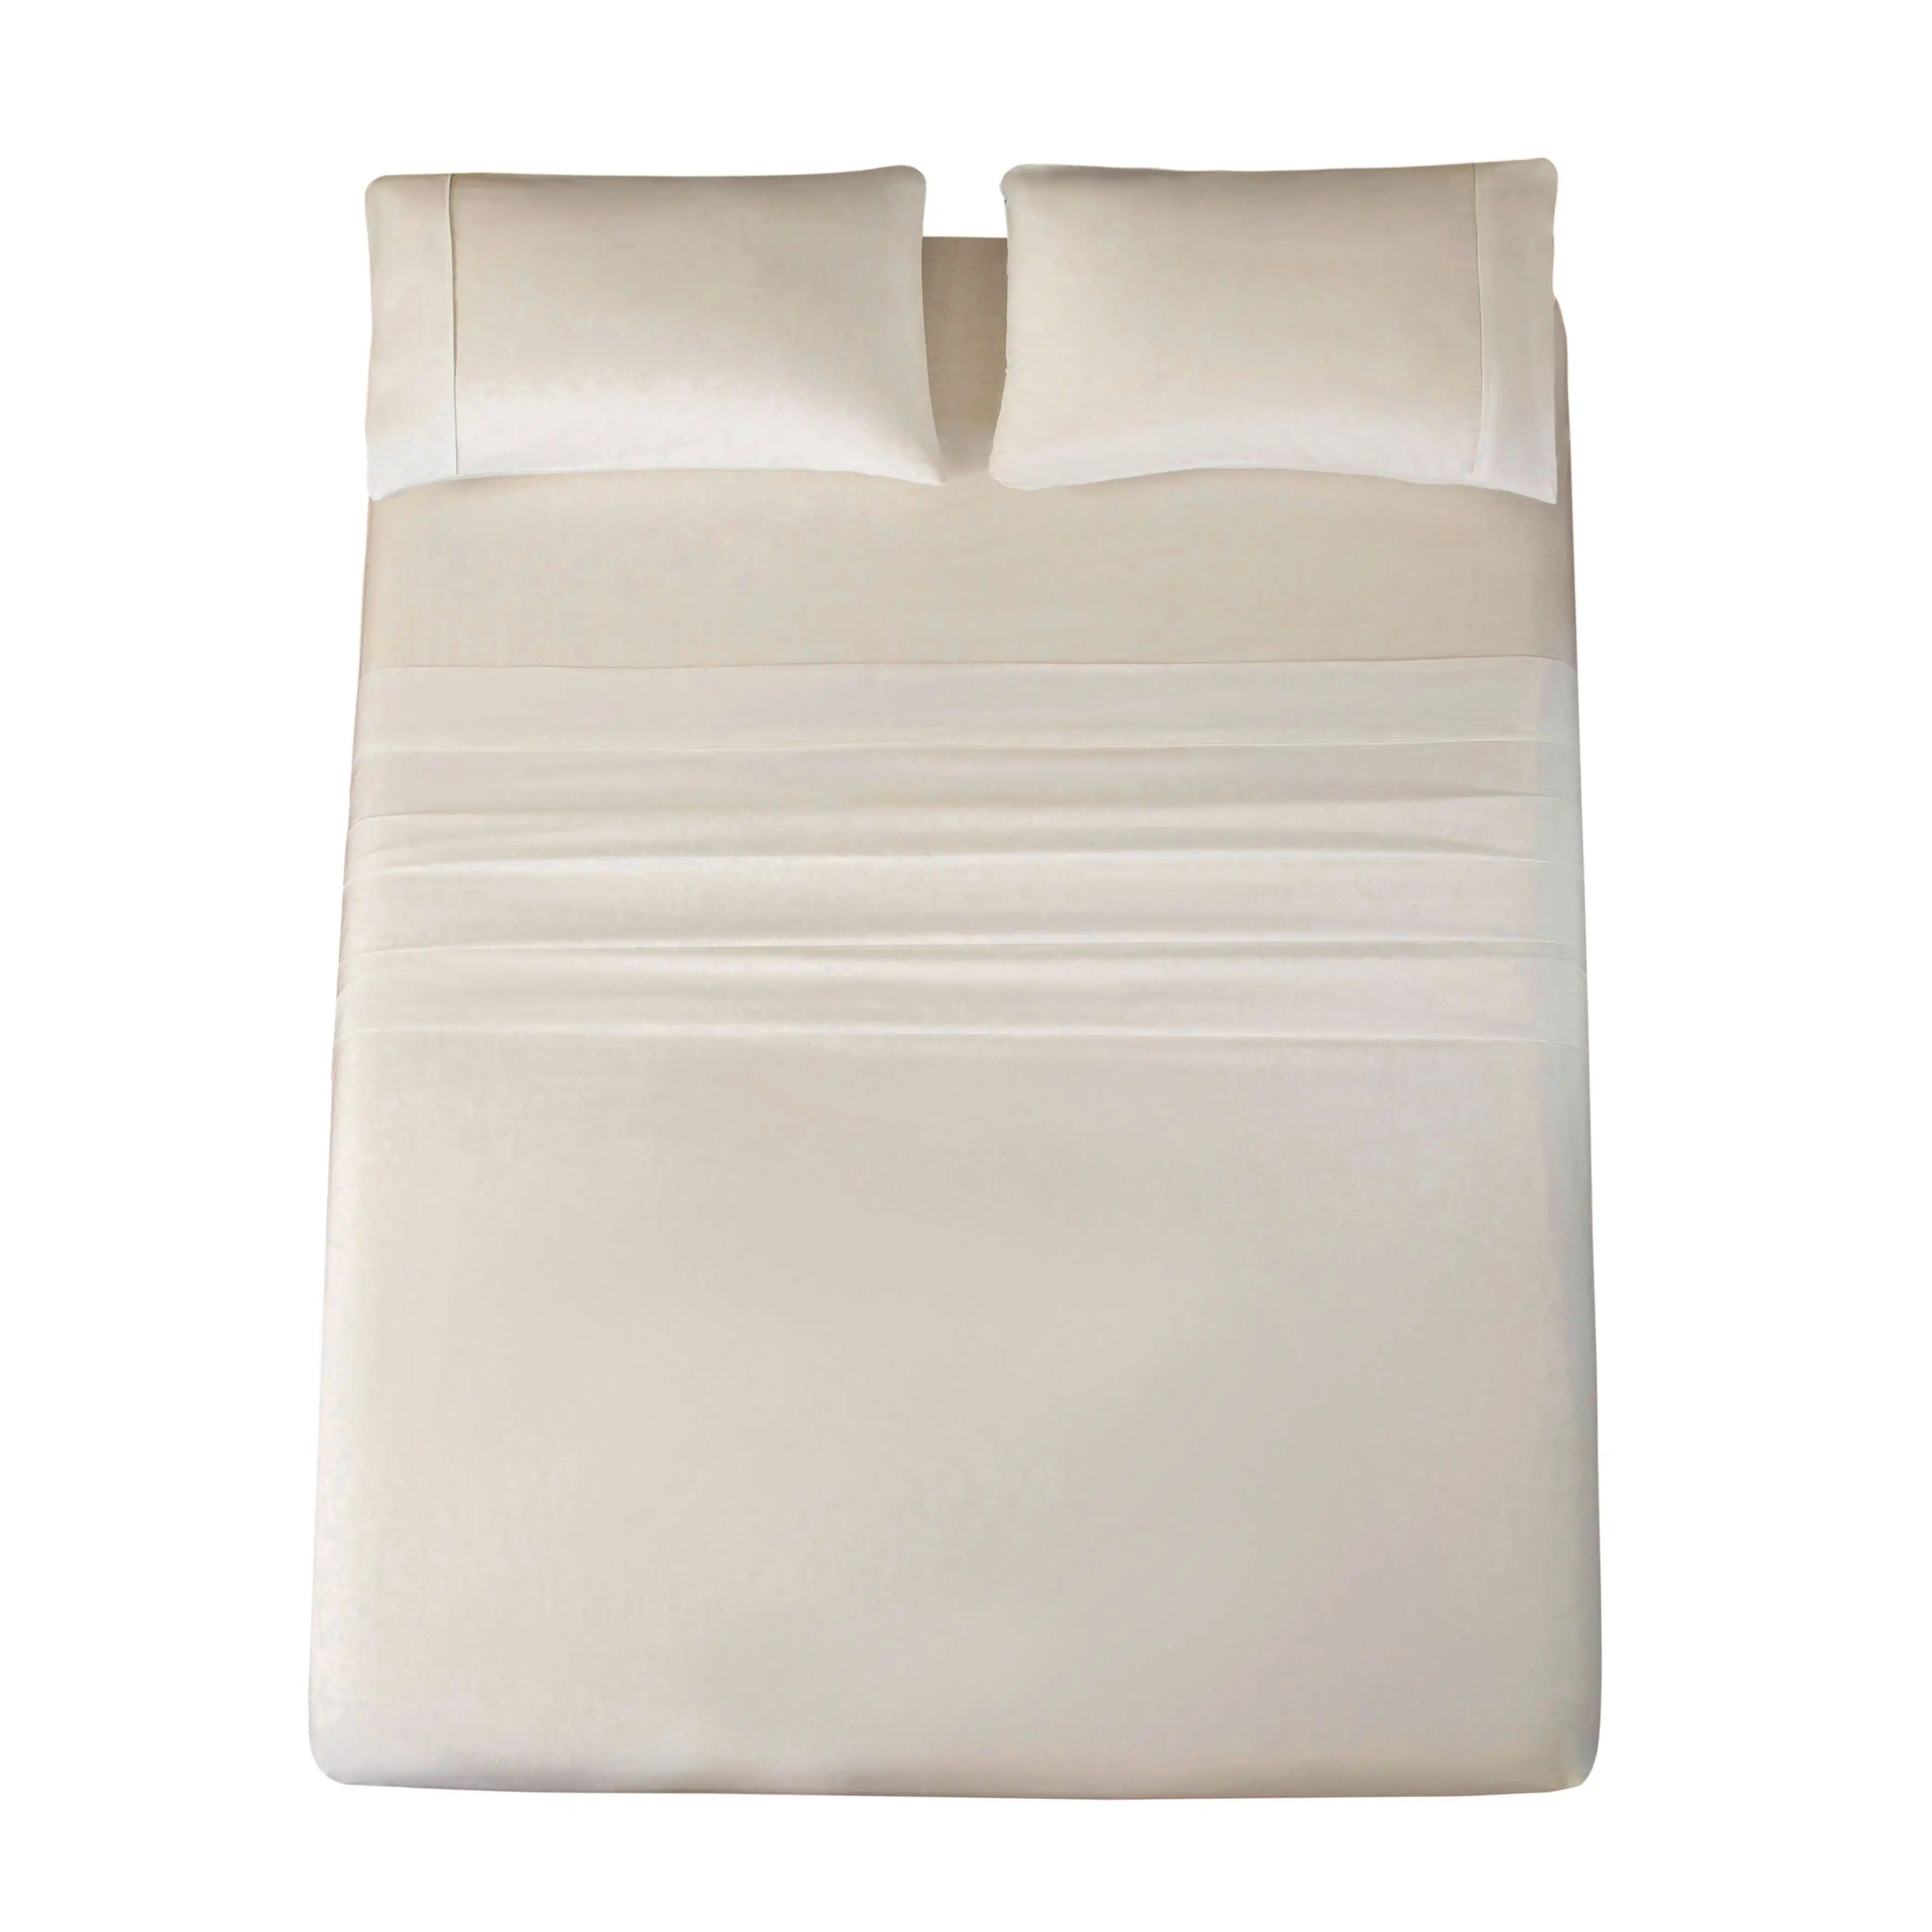 Soft Cotton Sheet Sets Home Microfiber Solid Color Bed Sheet